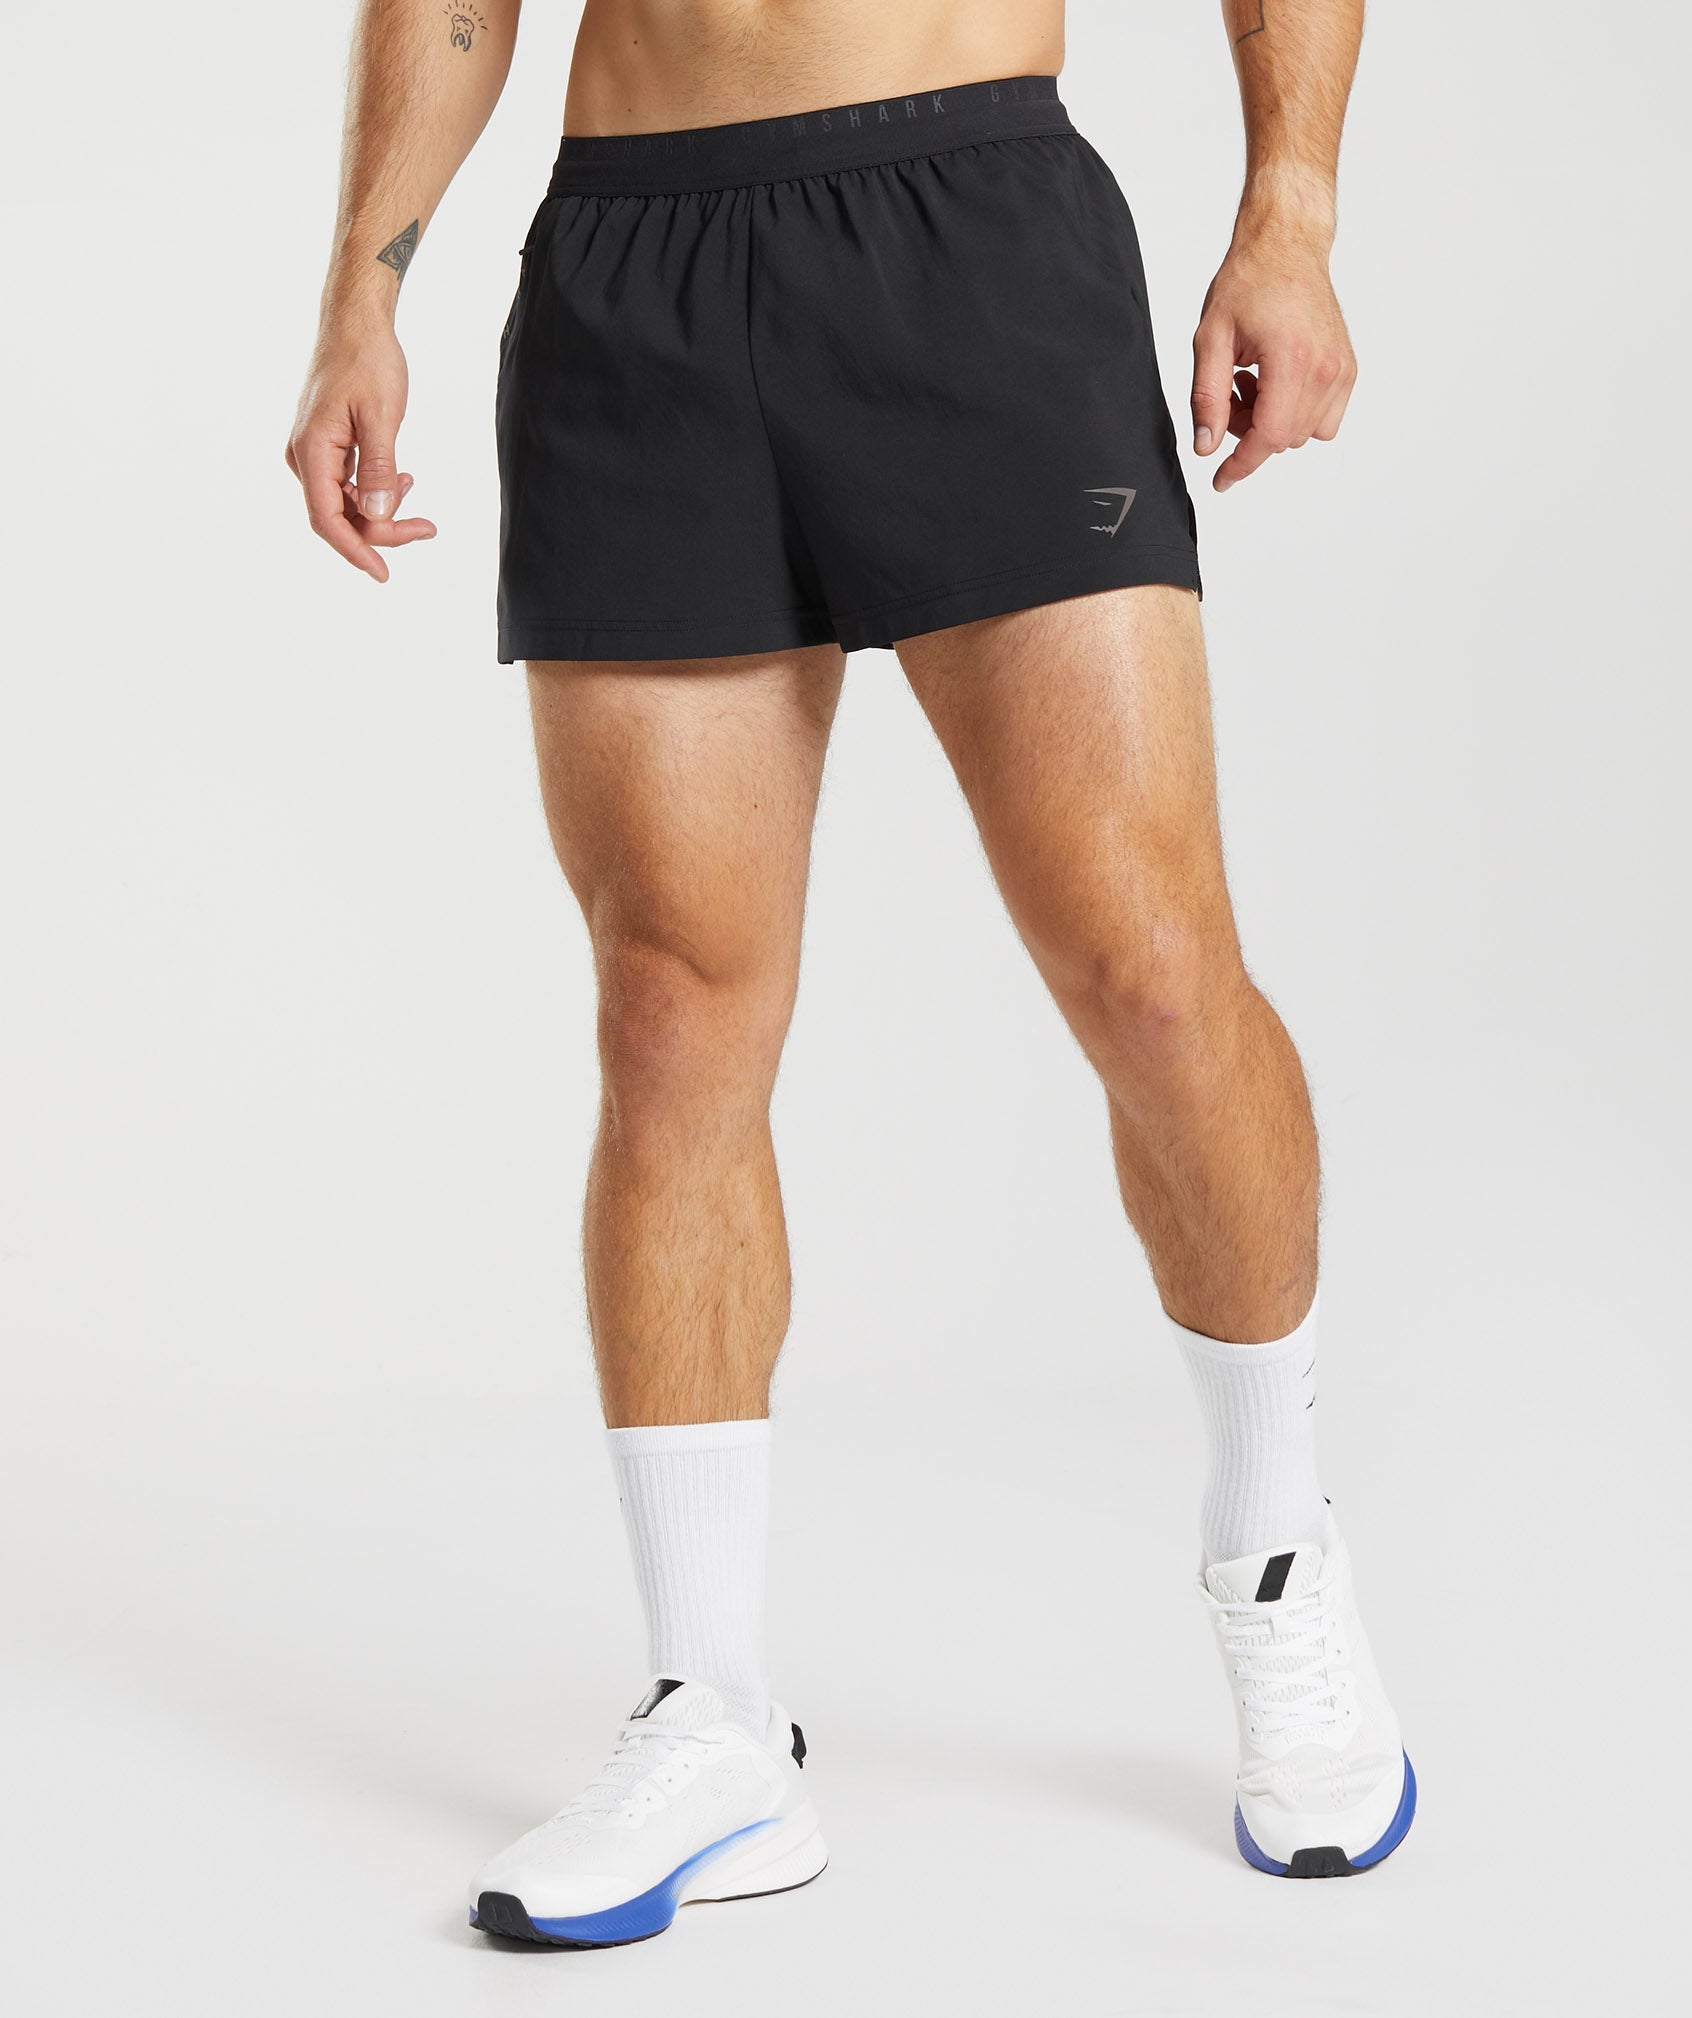 GB, Limitless 2-in-1 Shorts - Light Grey, Gym Shorts Men